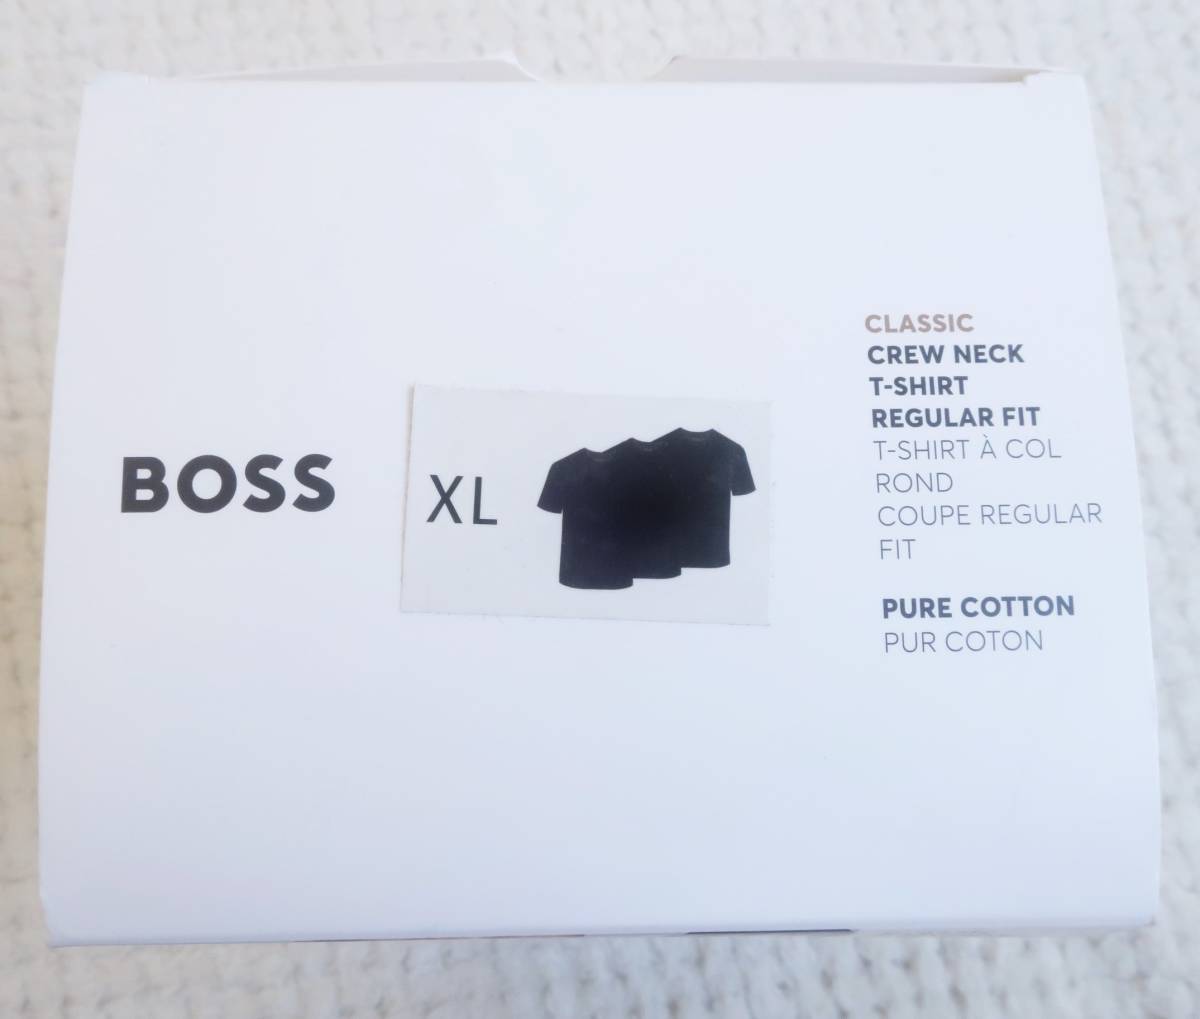  new goods * Hugo Boss HUGO BOSS* black T-shirt 3 pieces set * slim * crew neck *. Logo embroidery * cotton * black *XL*73